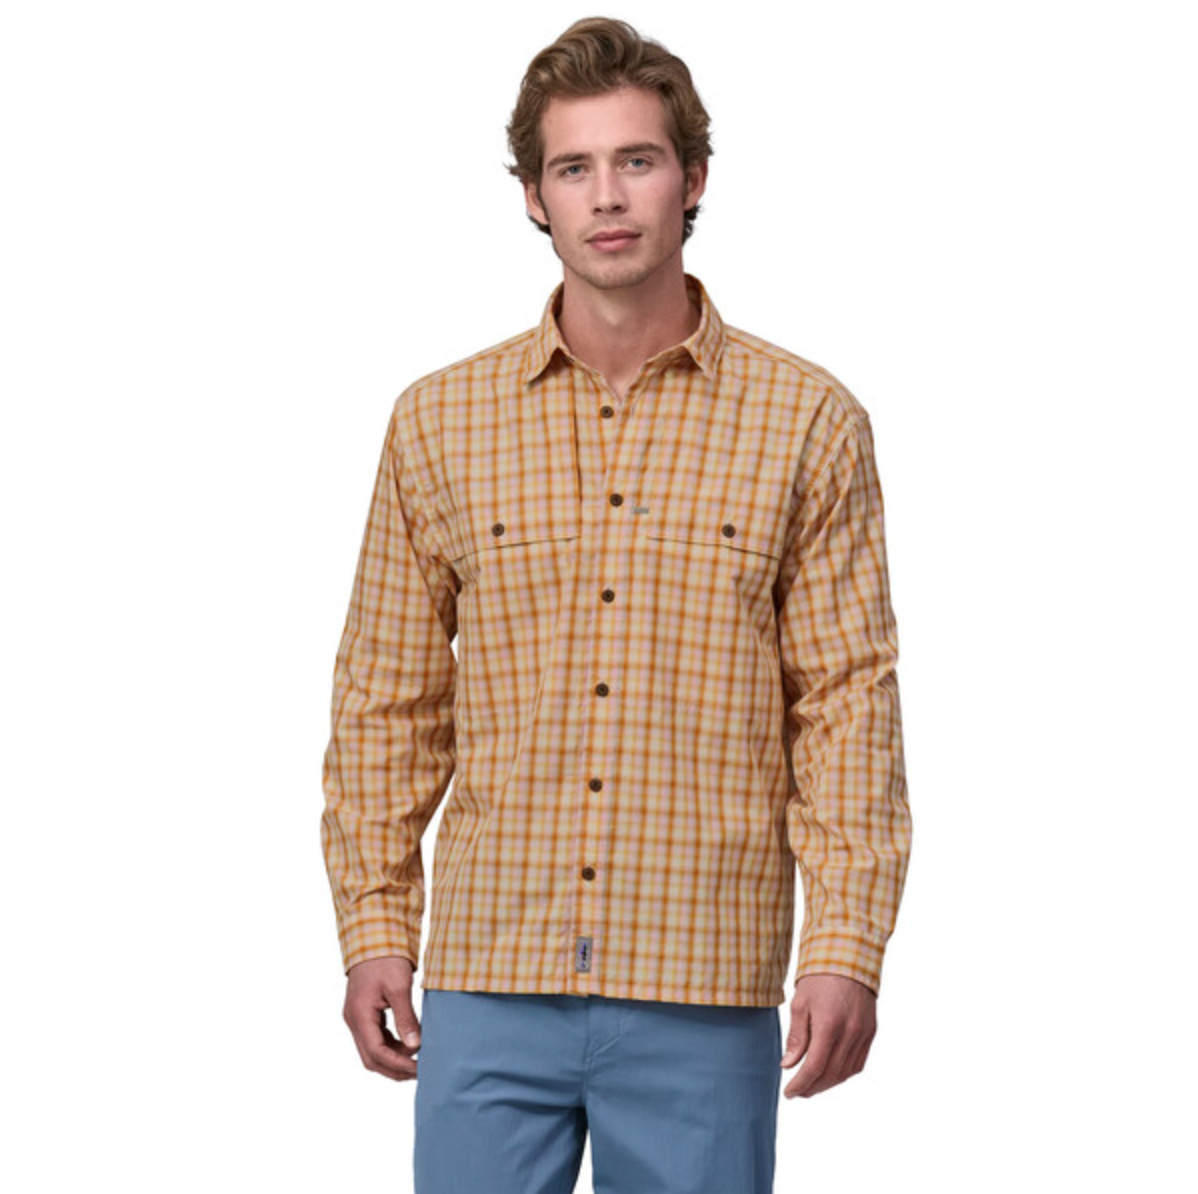 Patagonia Men's Long-Sleeved Island Hopper Shirt - Mirrored: Golden Caramel